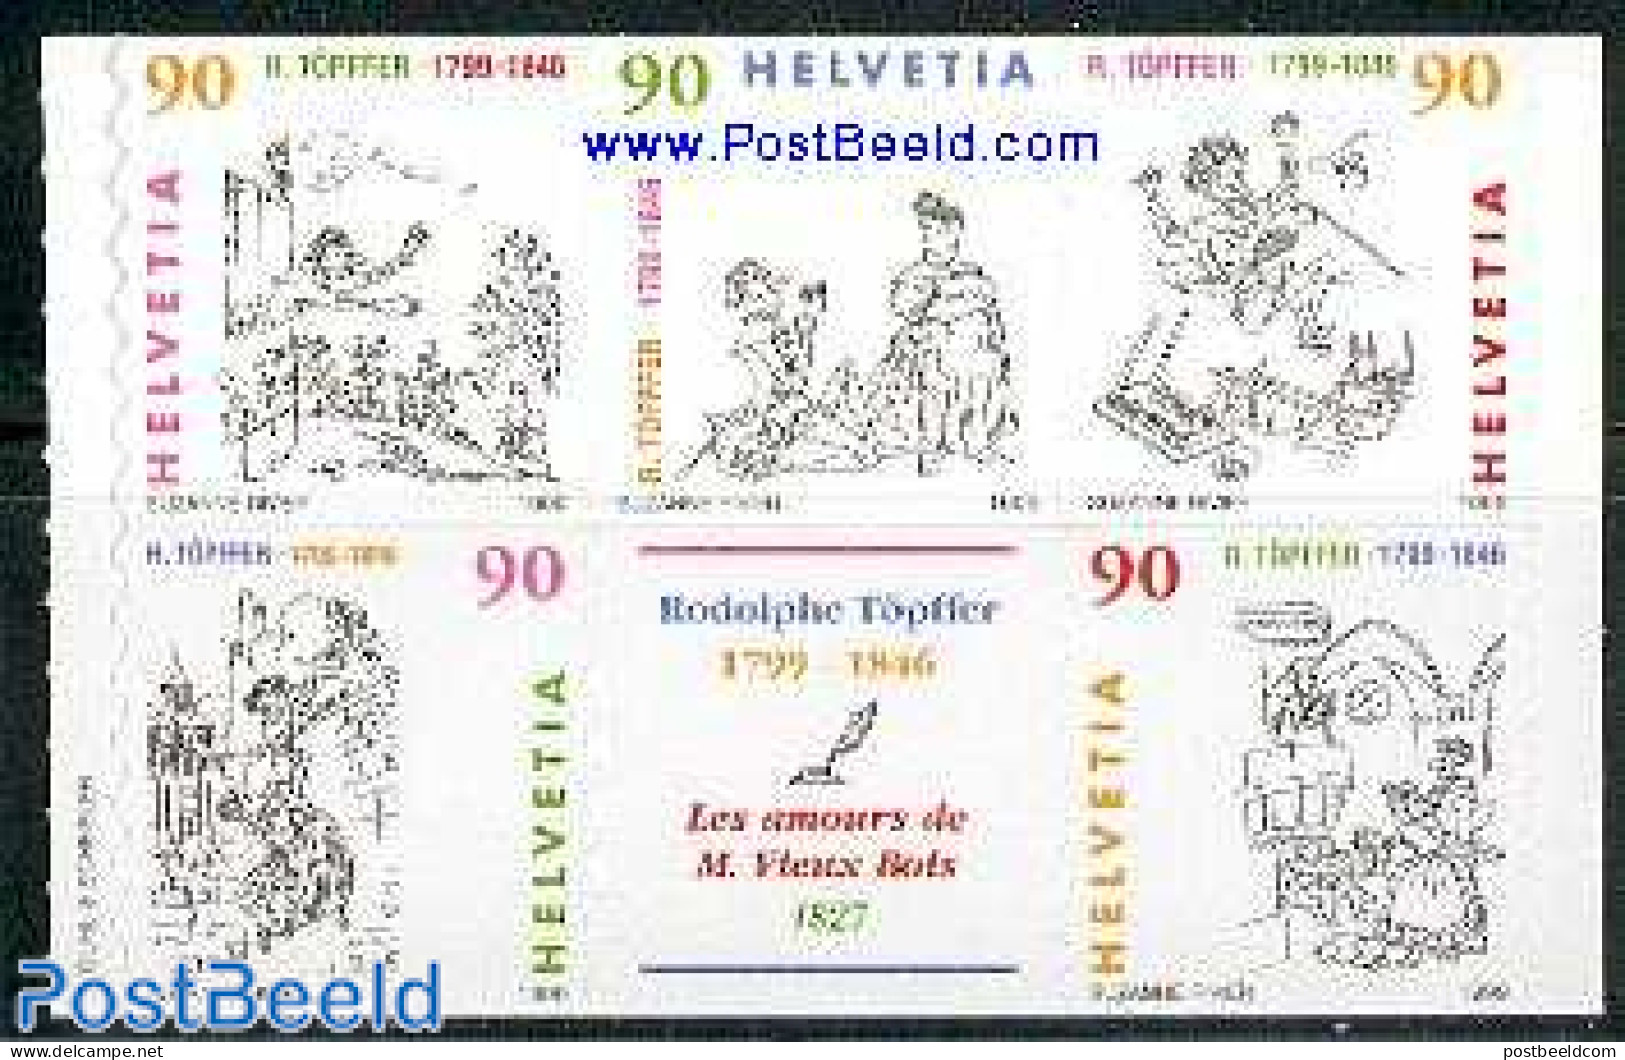 Switzerland 1999 R. Topffer 5v+tab S-a [++], Mint NH, Art - Children's Books Illustrations - Unused Stamps